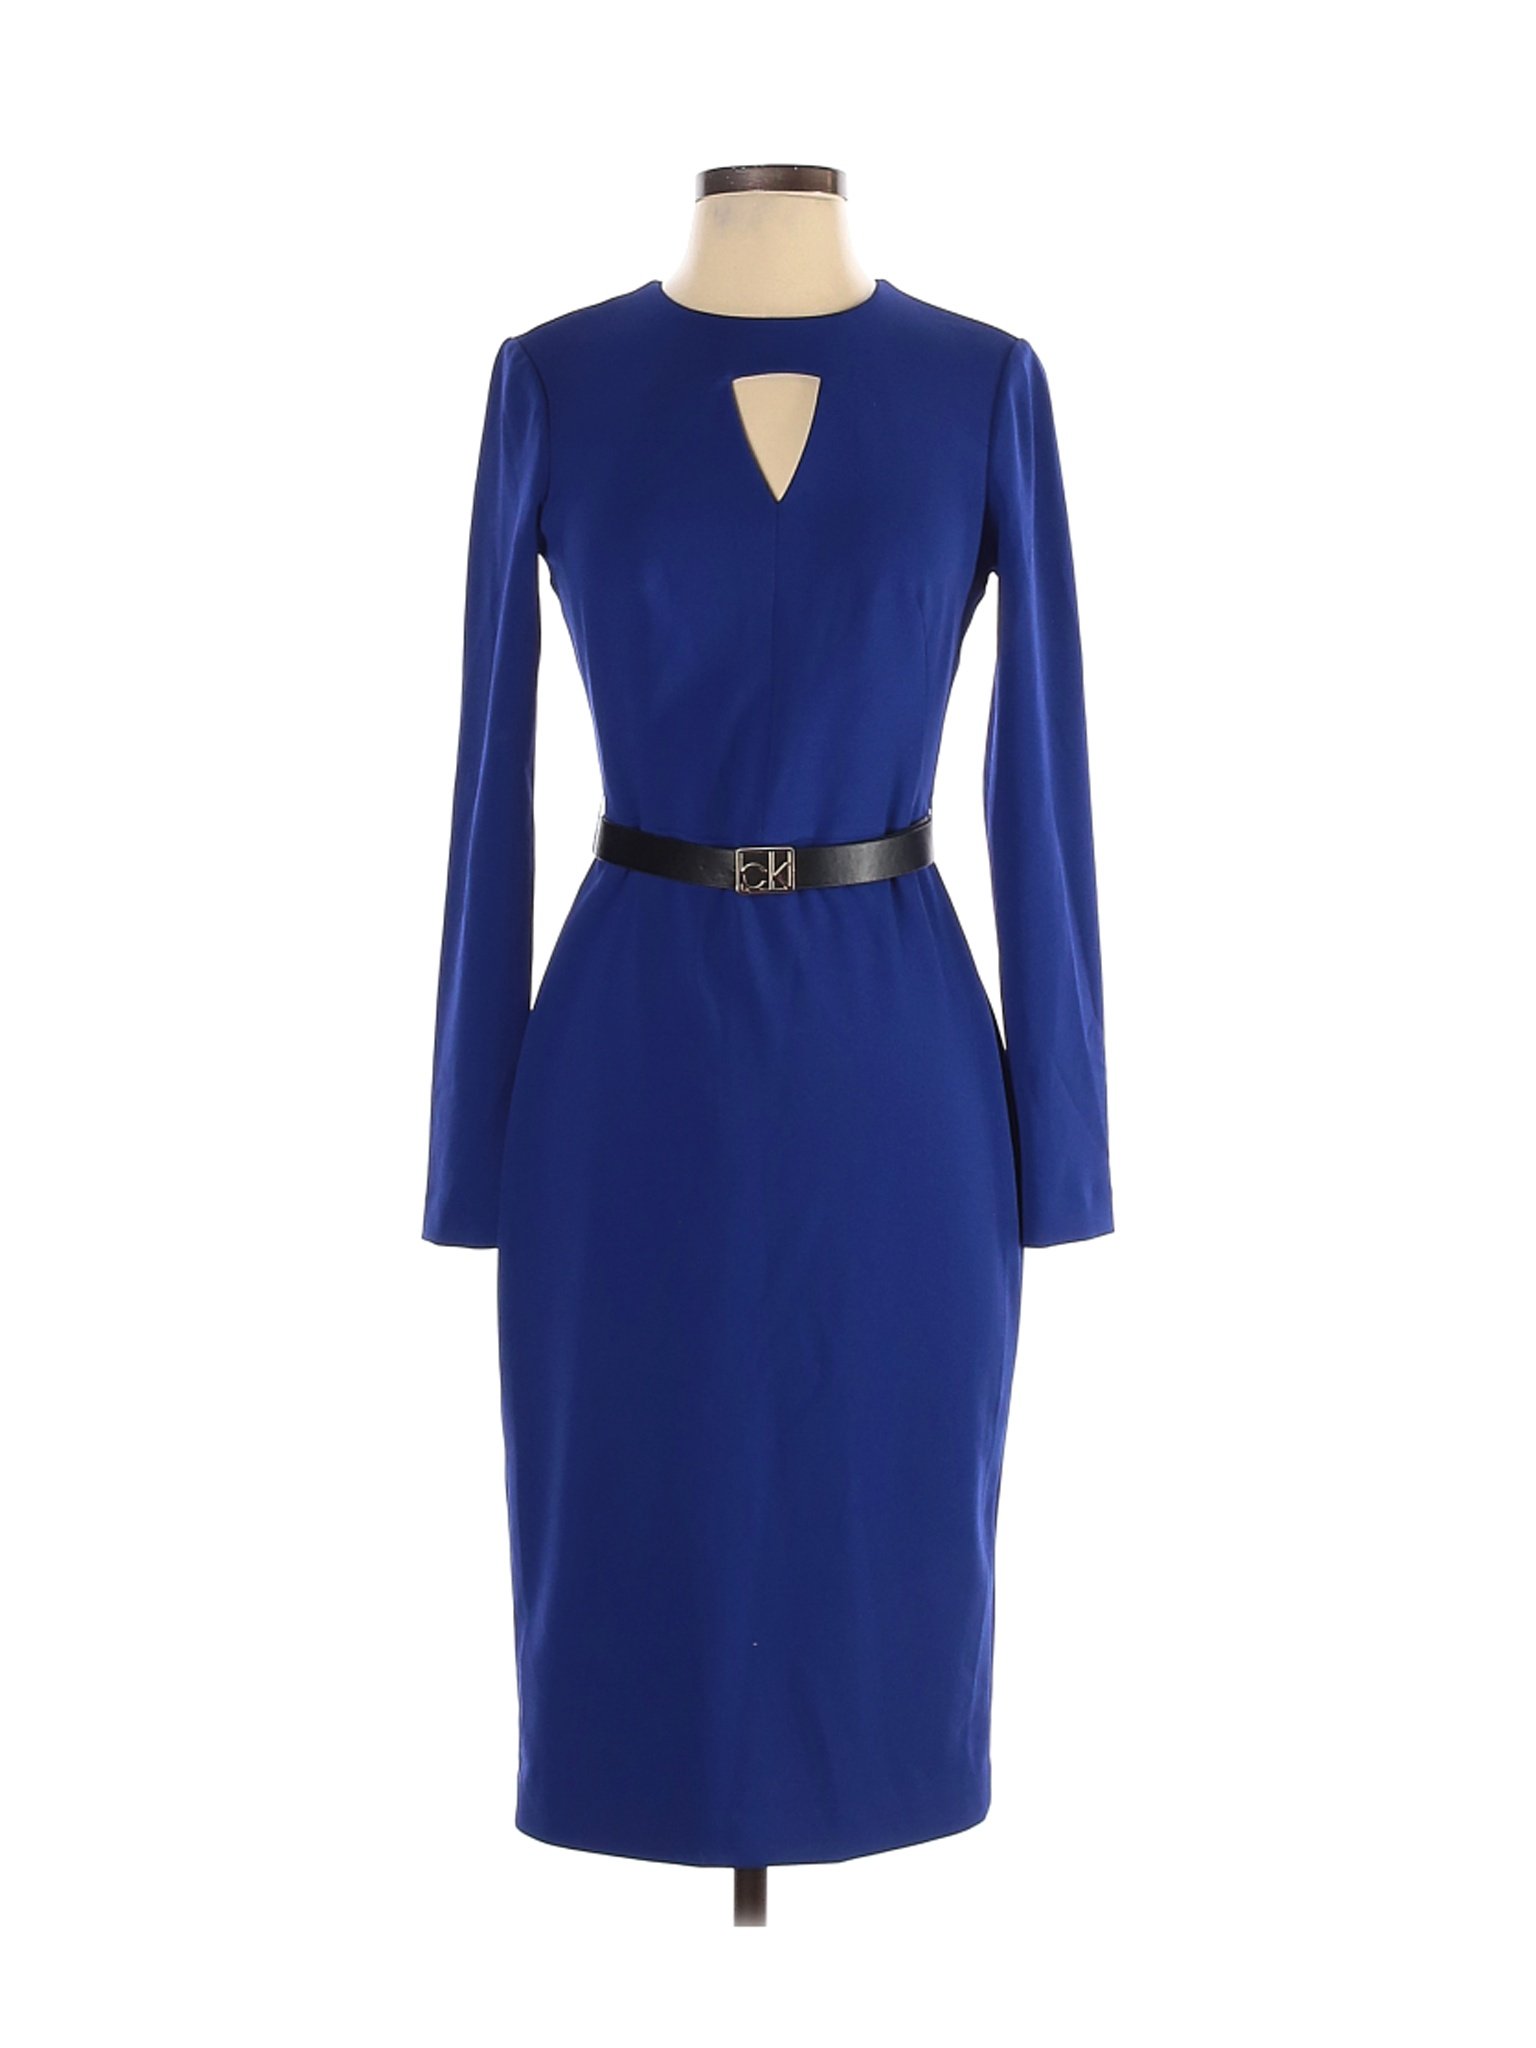 NWT Calvin Klein Women Blue Cocktail Dress 2 | eBay